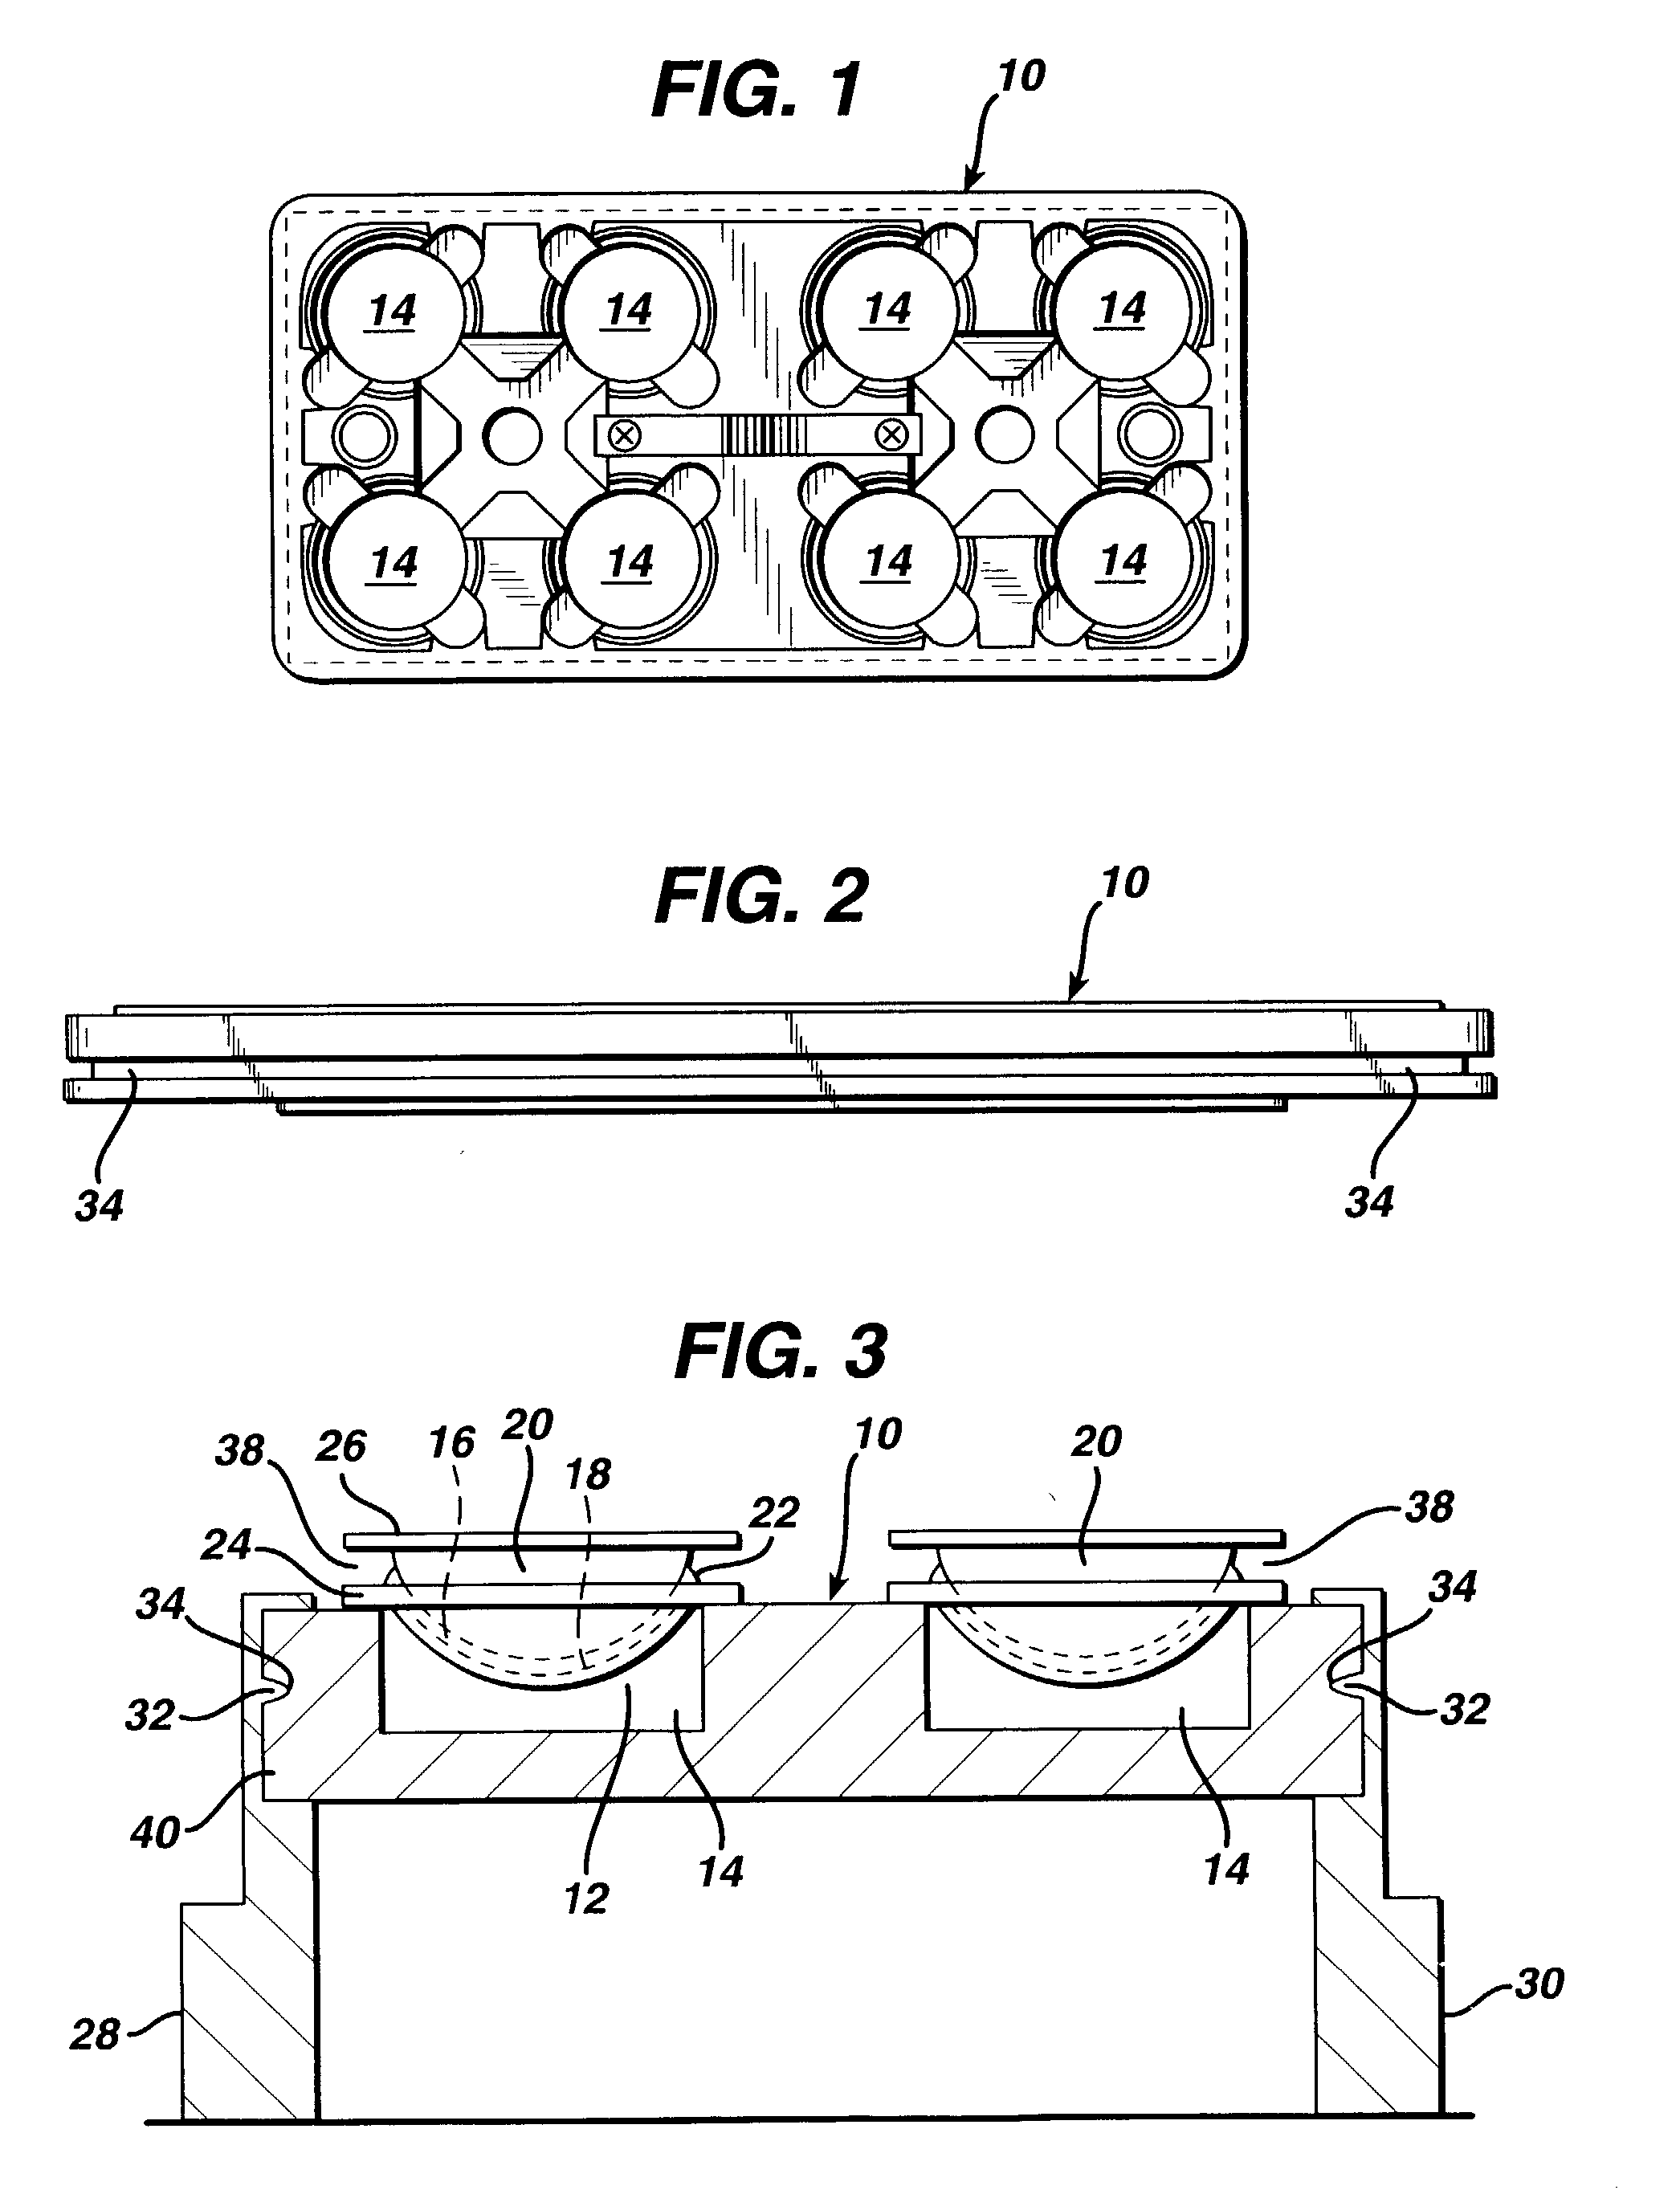 Ir-emitter heating device and method for demolding lenses